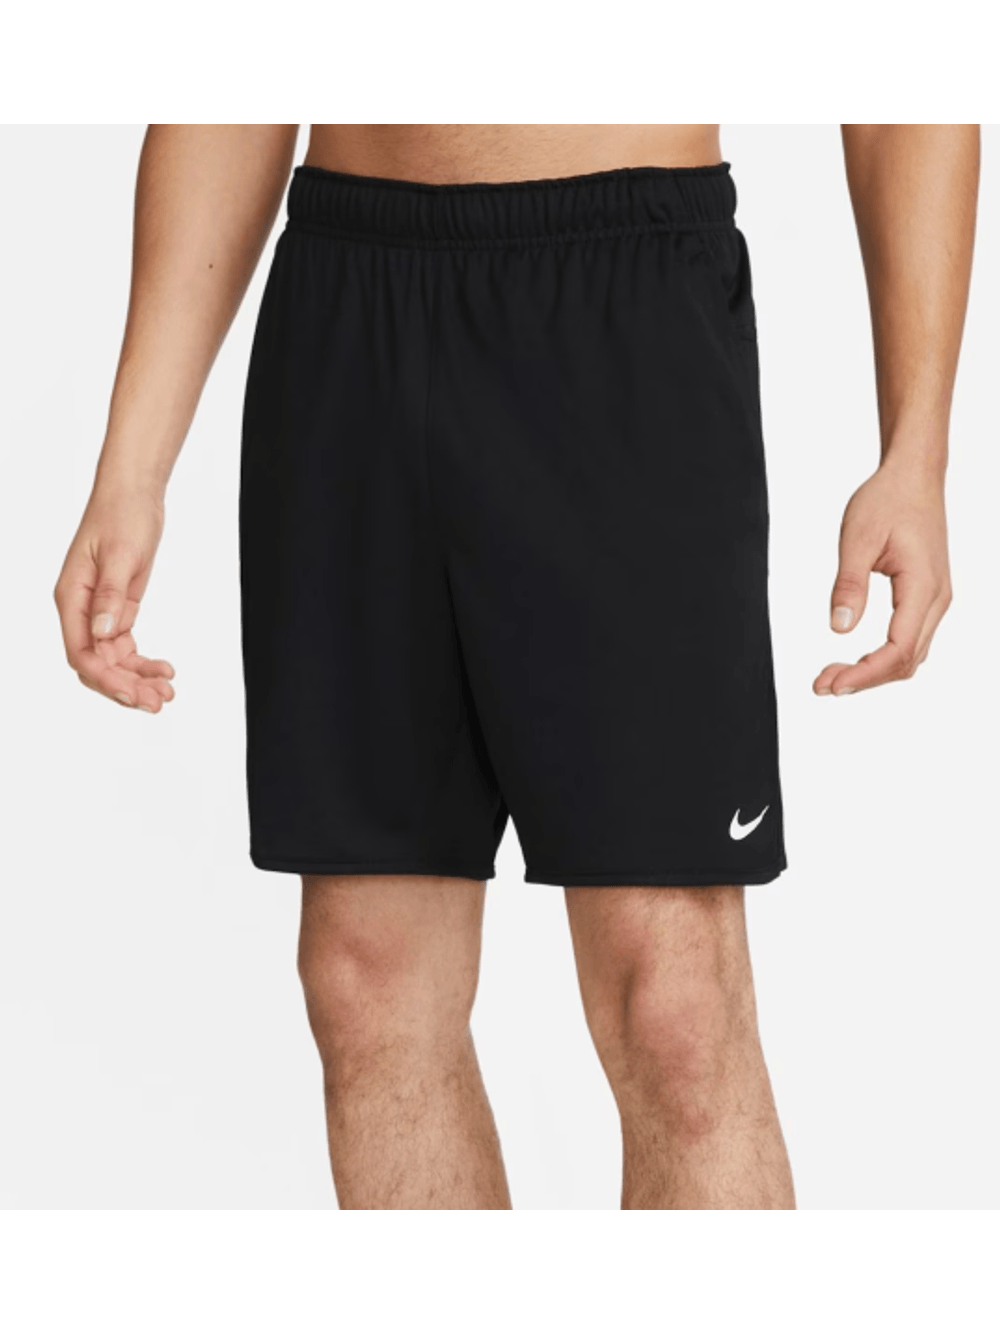 Short Nike Sportswear W Air Knit Azul - Compre Agora